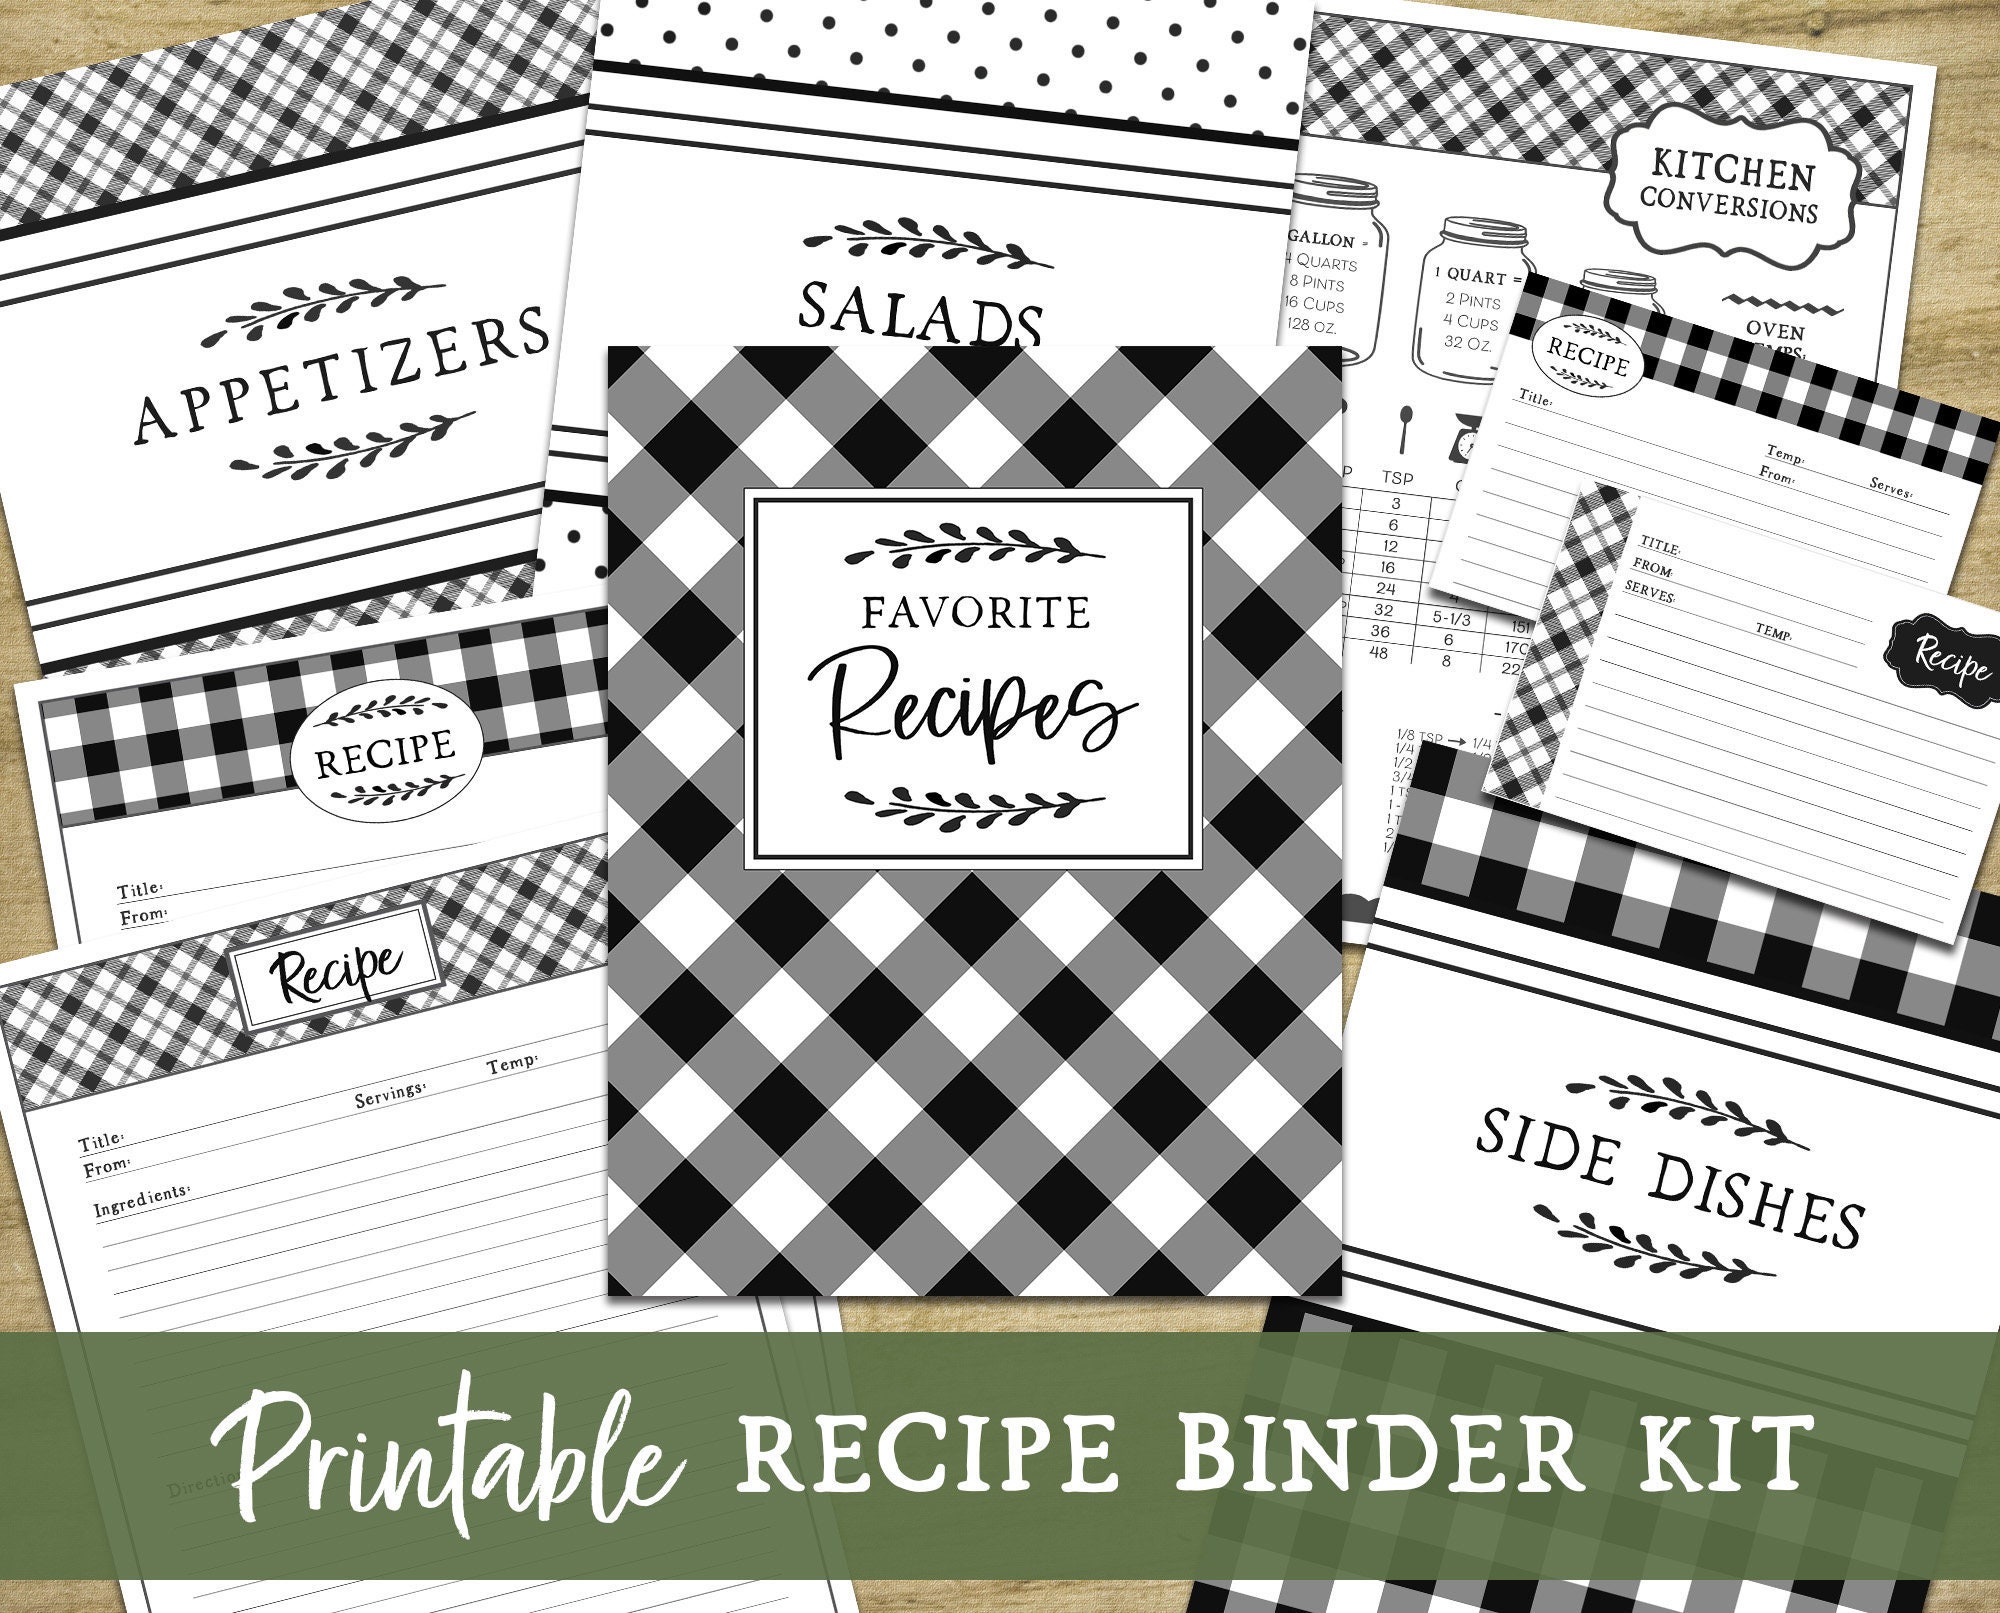 Personalized Recipe Cards - Farmhouse Kitchen